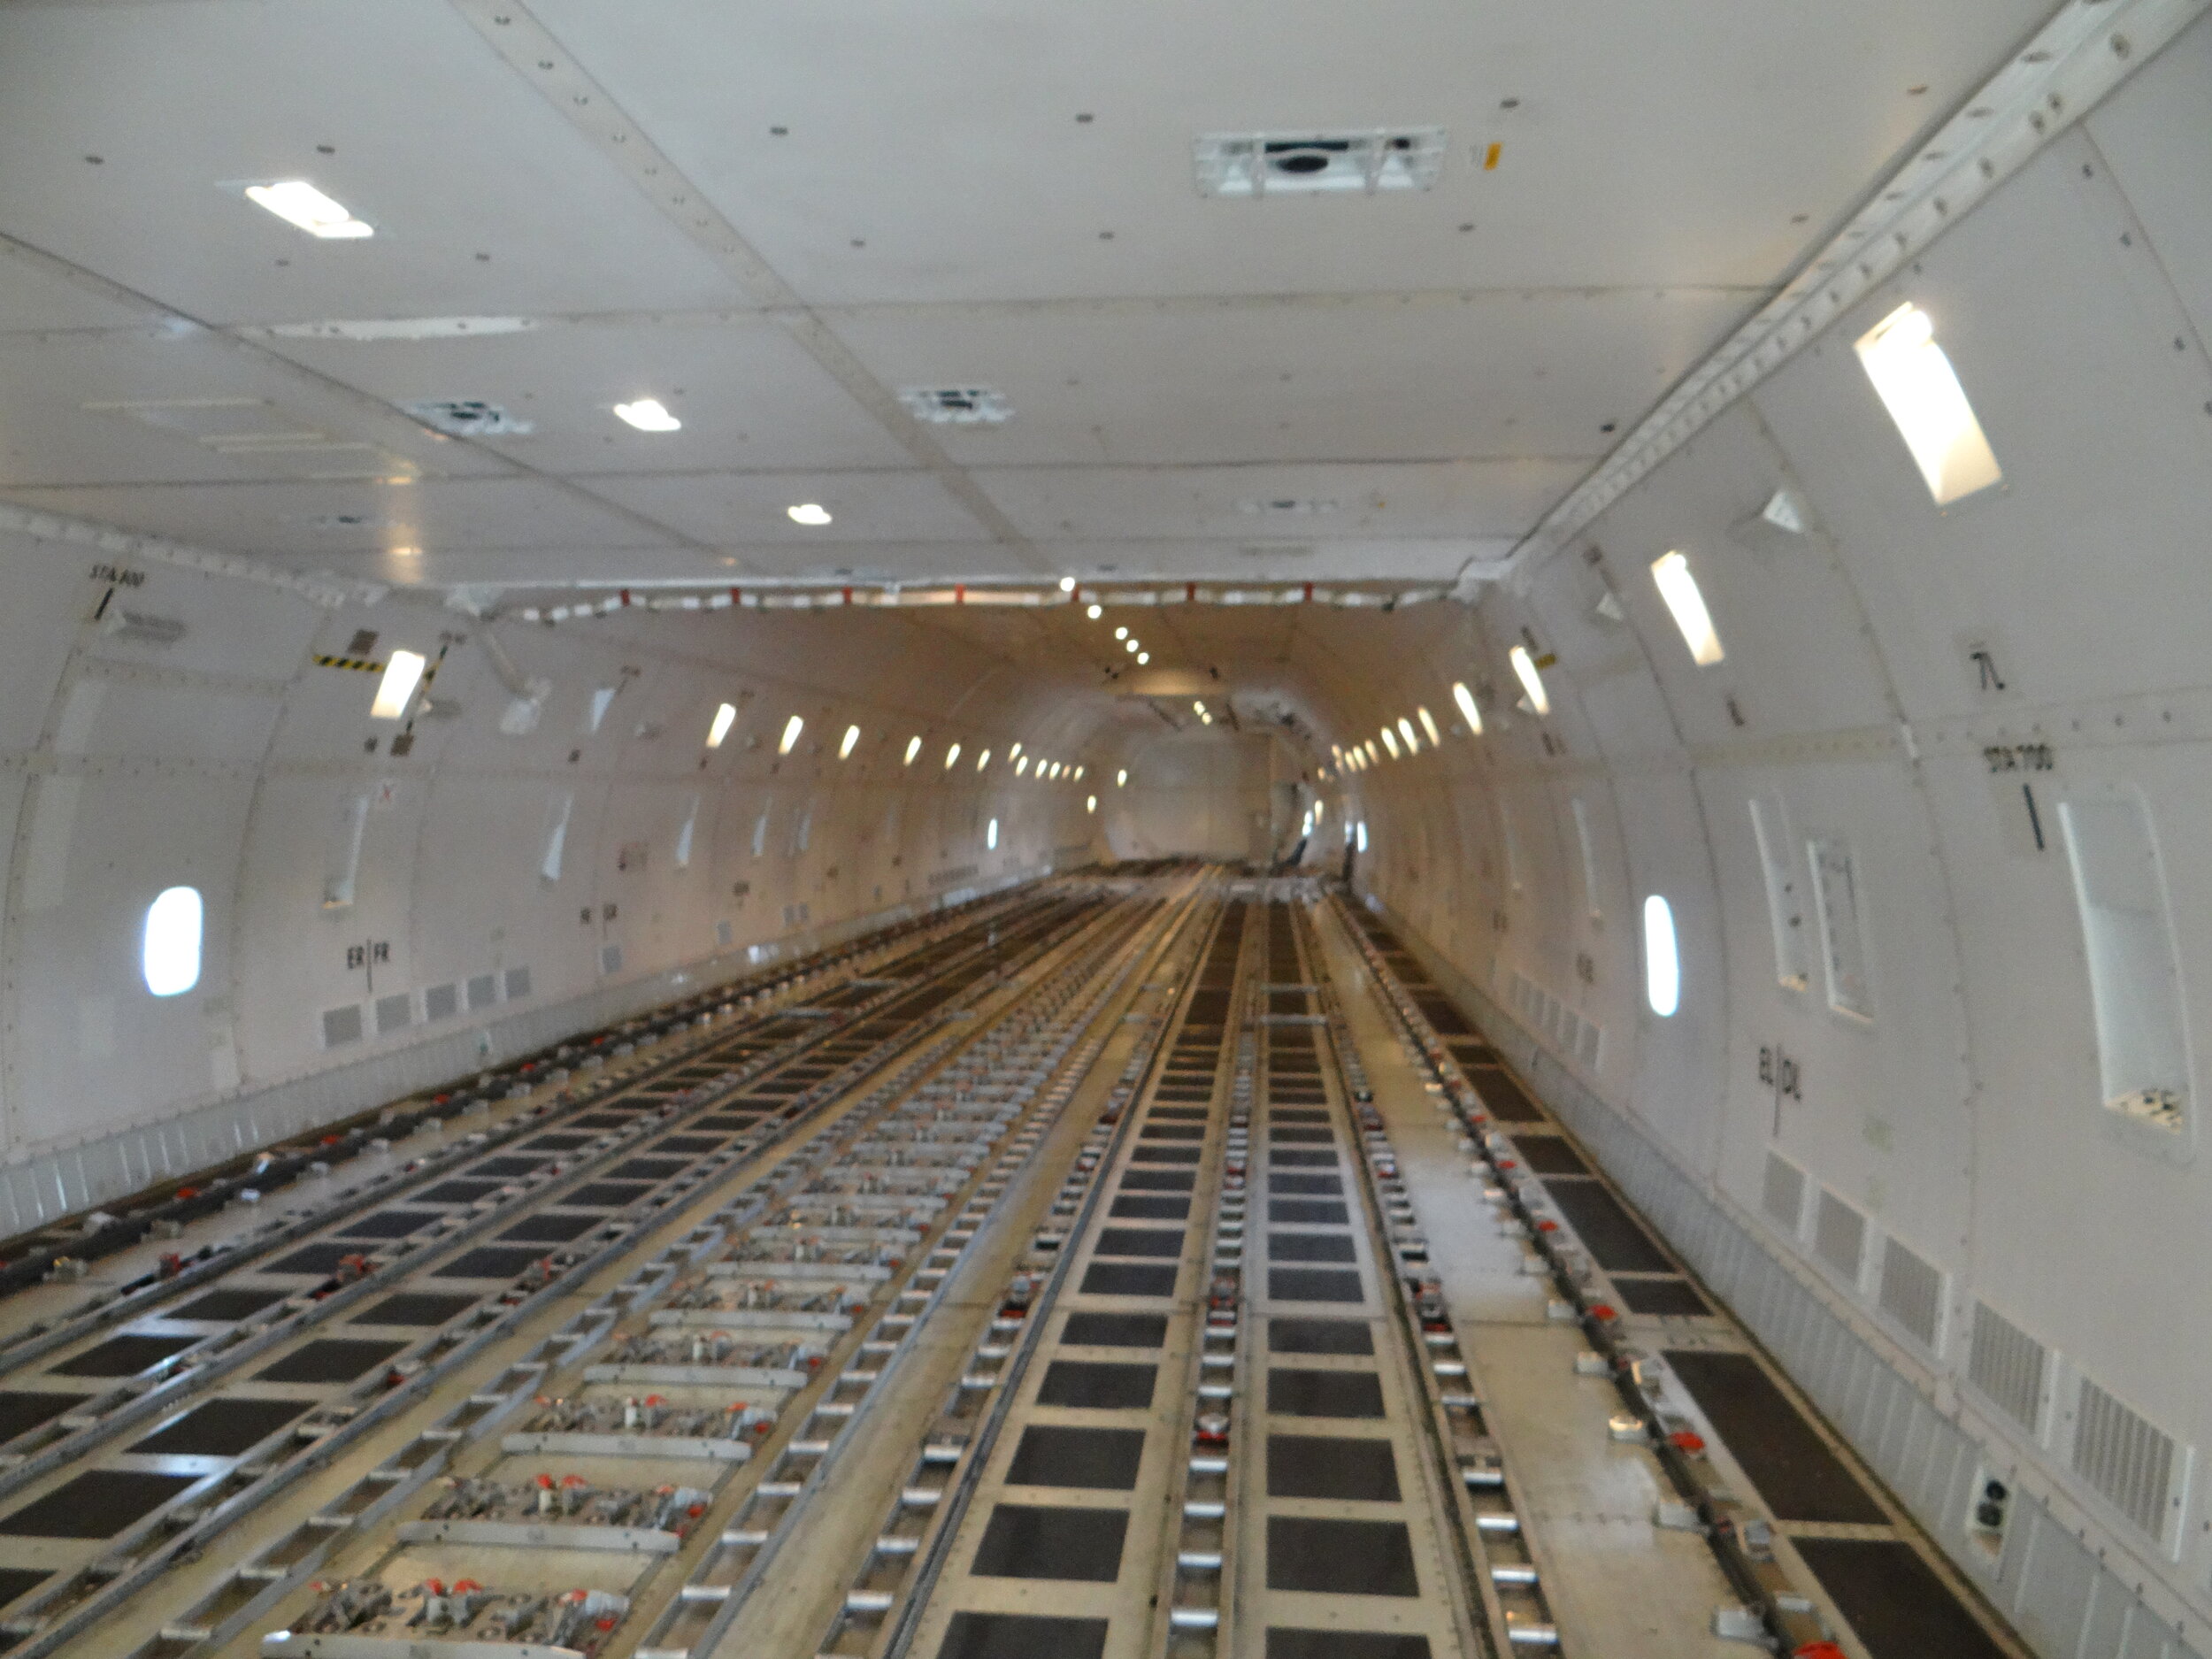 Inside Boeing 747 Cargo Plane